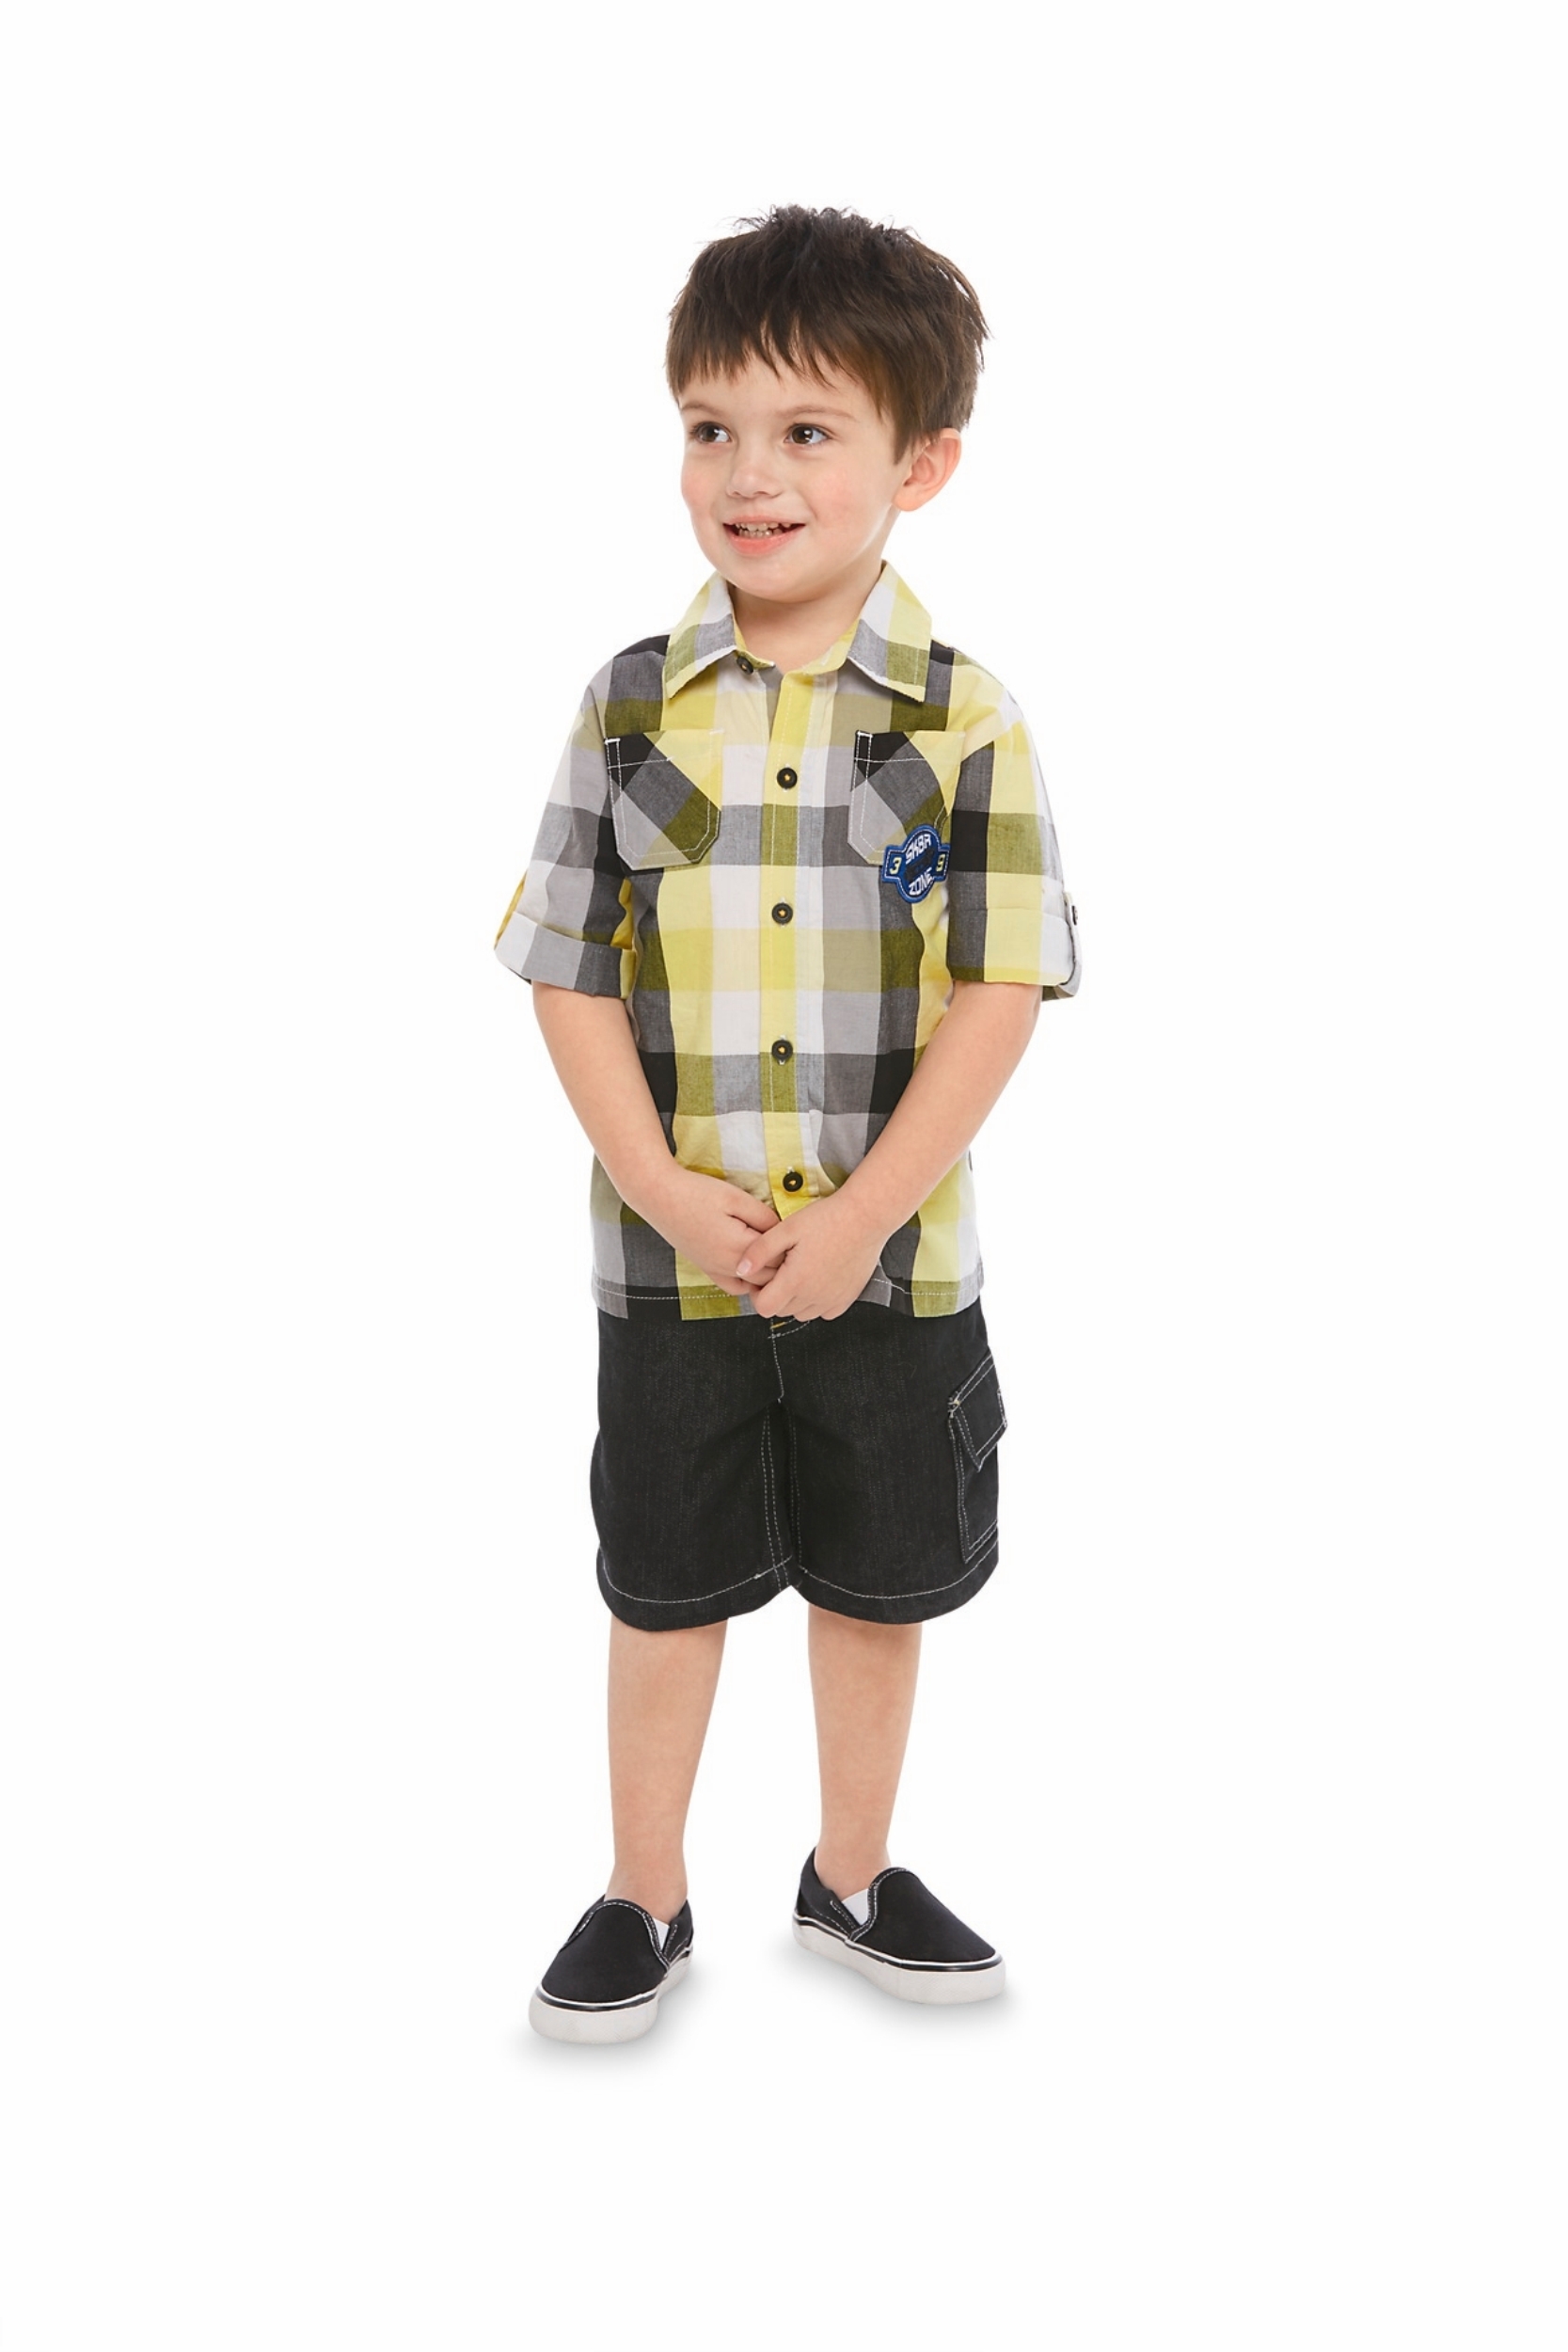 WonderKids Toddler Boy's Shirt & Denim Shorts - Plaid